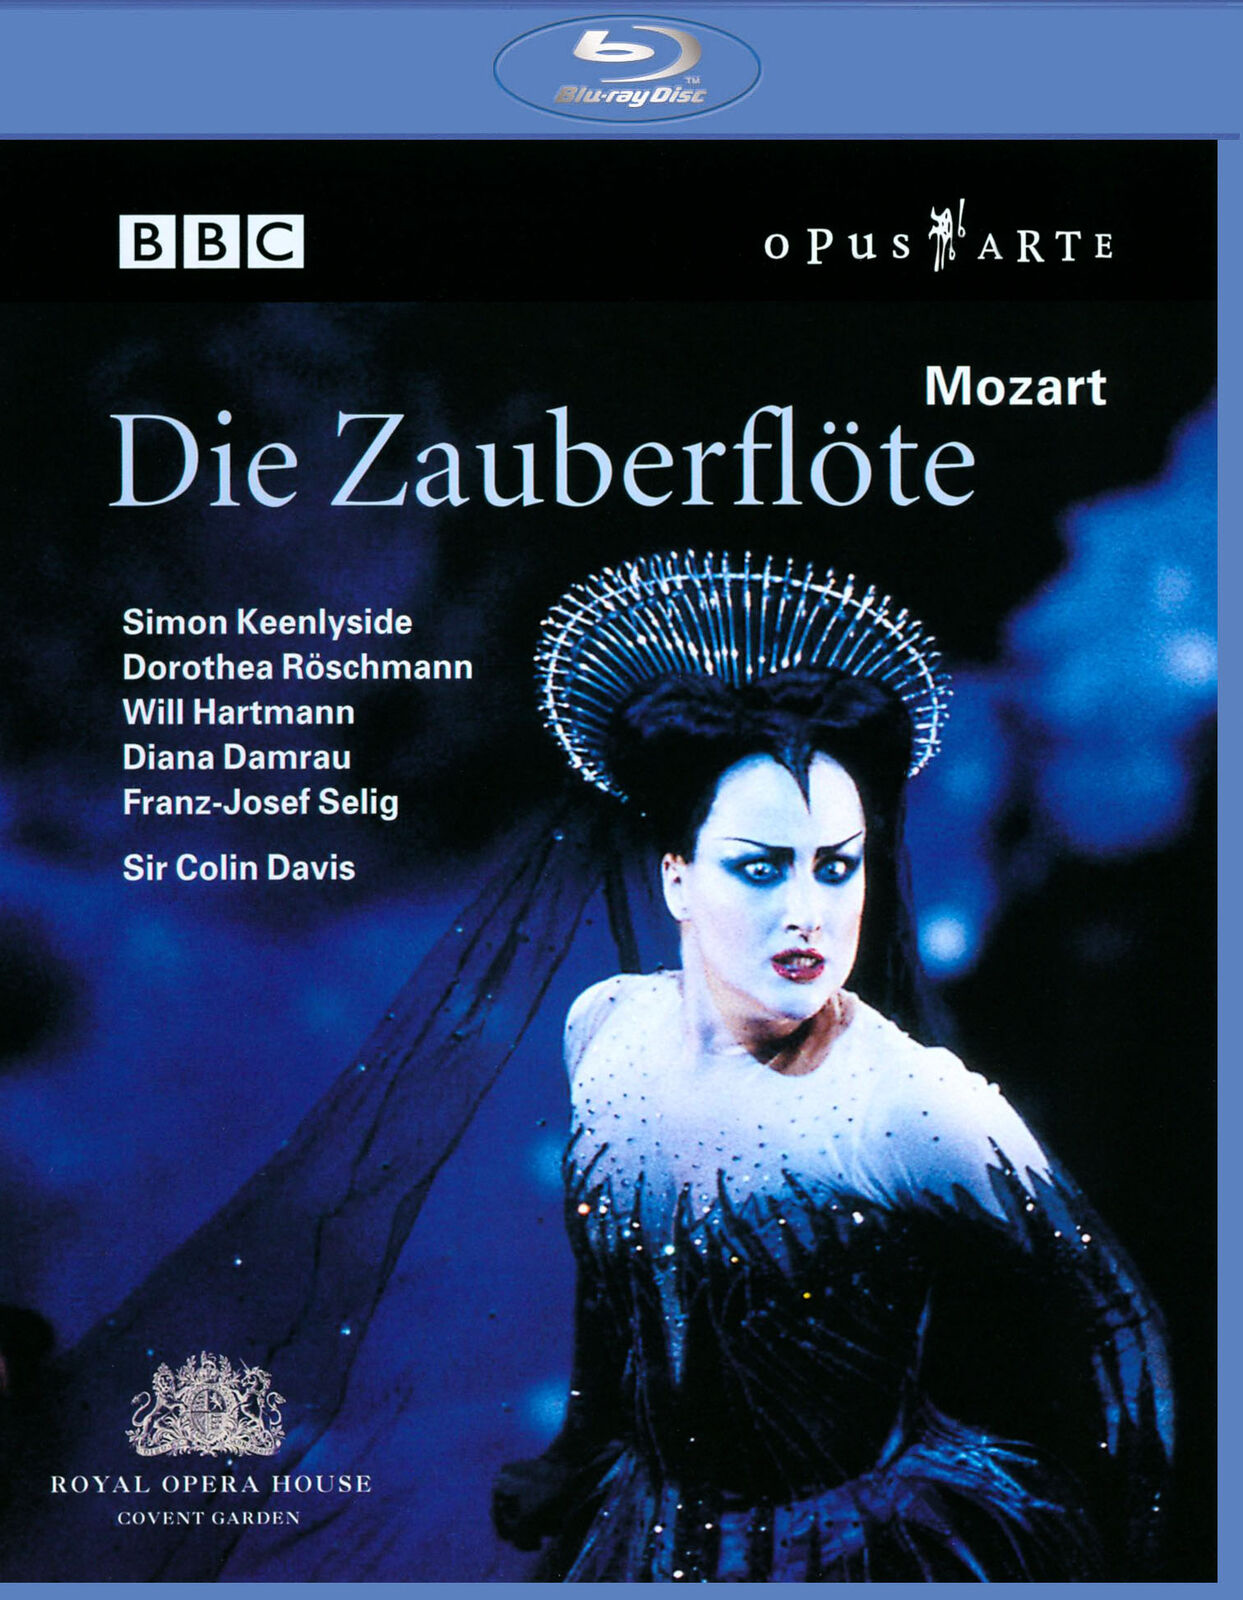 Mozart: Die Zauberflote [The Magic Flute]: Simon Keenlyside: Royal Opera House - Blu-ray Opera 2003 NR